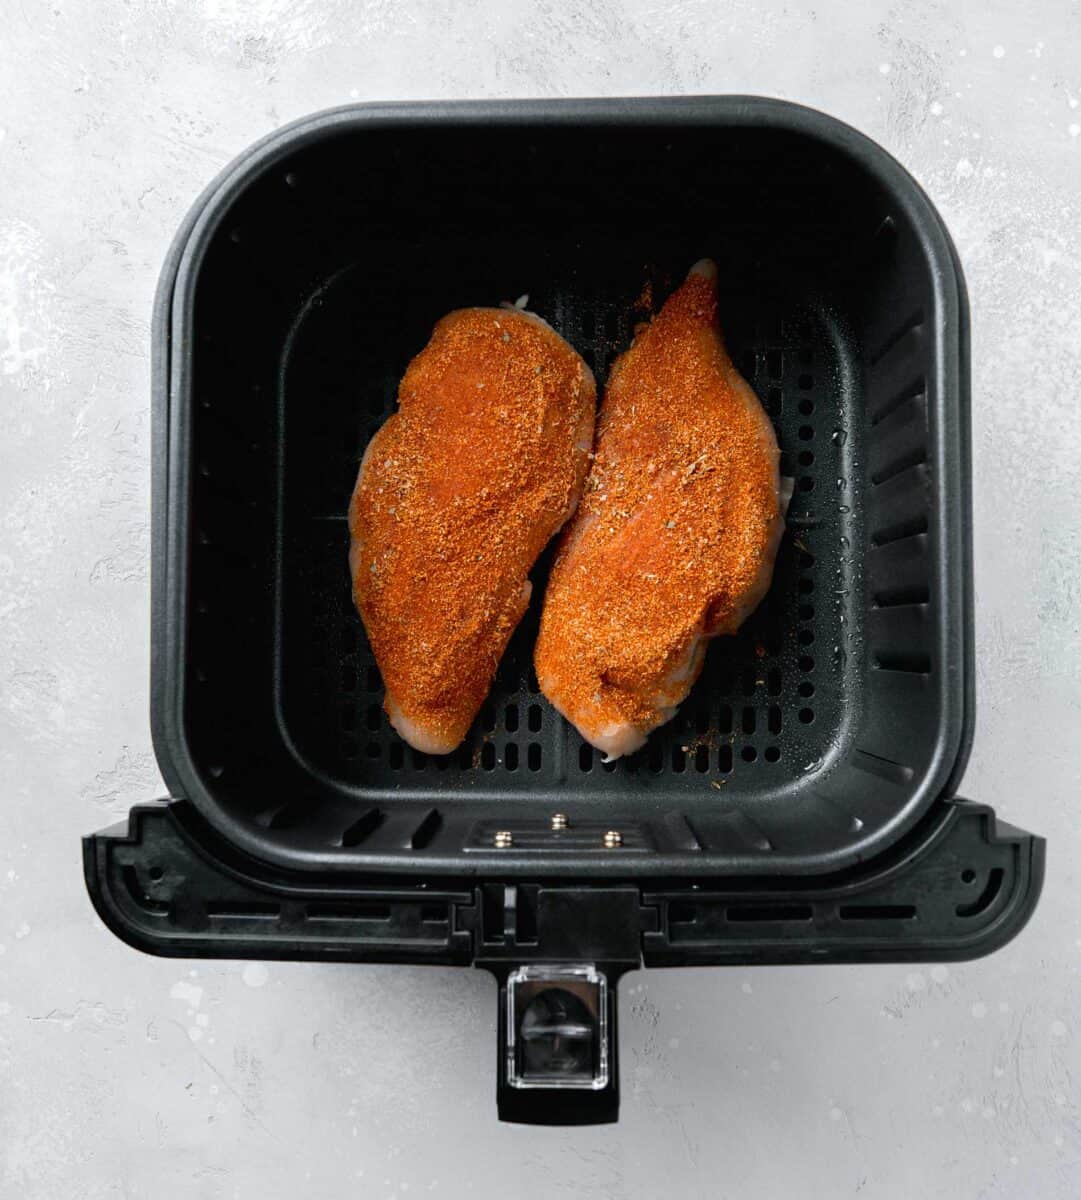 raw chicken coated in blackening seasoning inside the air fryer basket